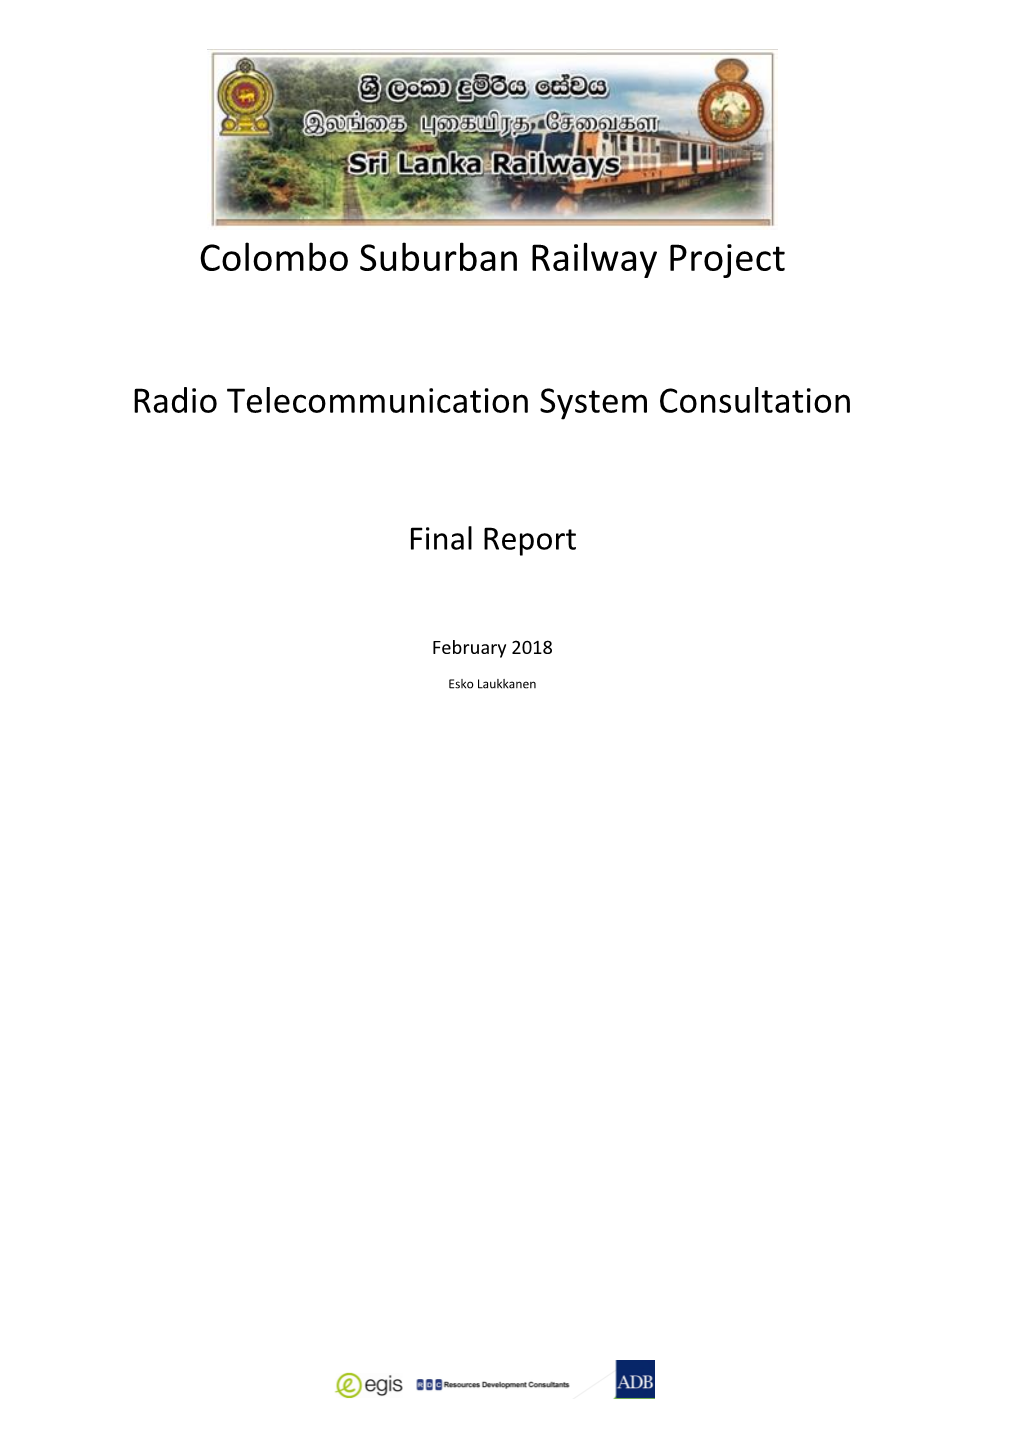 Radio Telecommunication System Consultation – Final Report